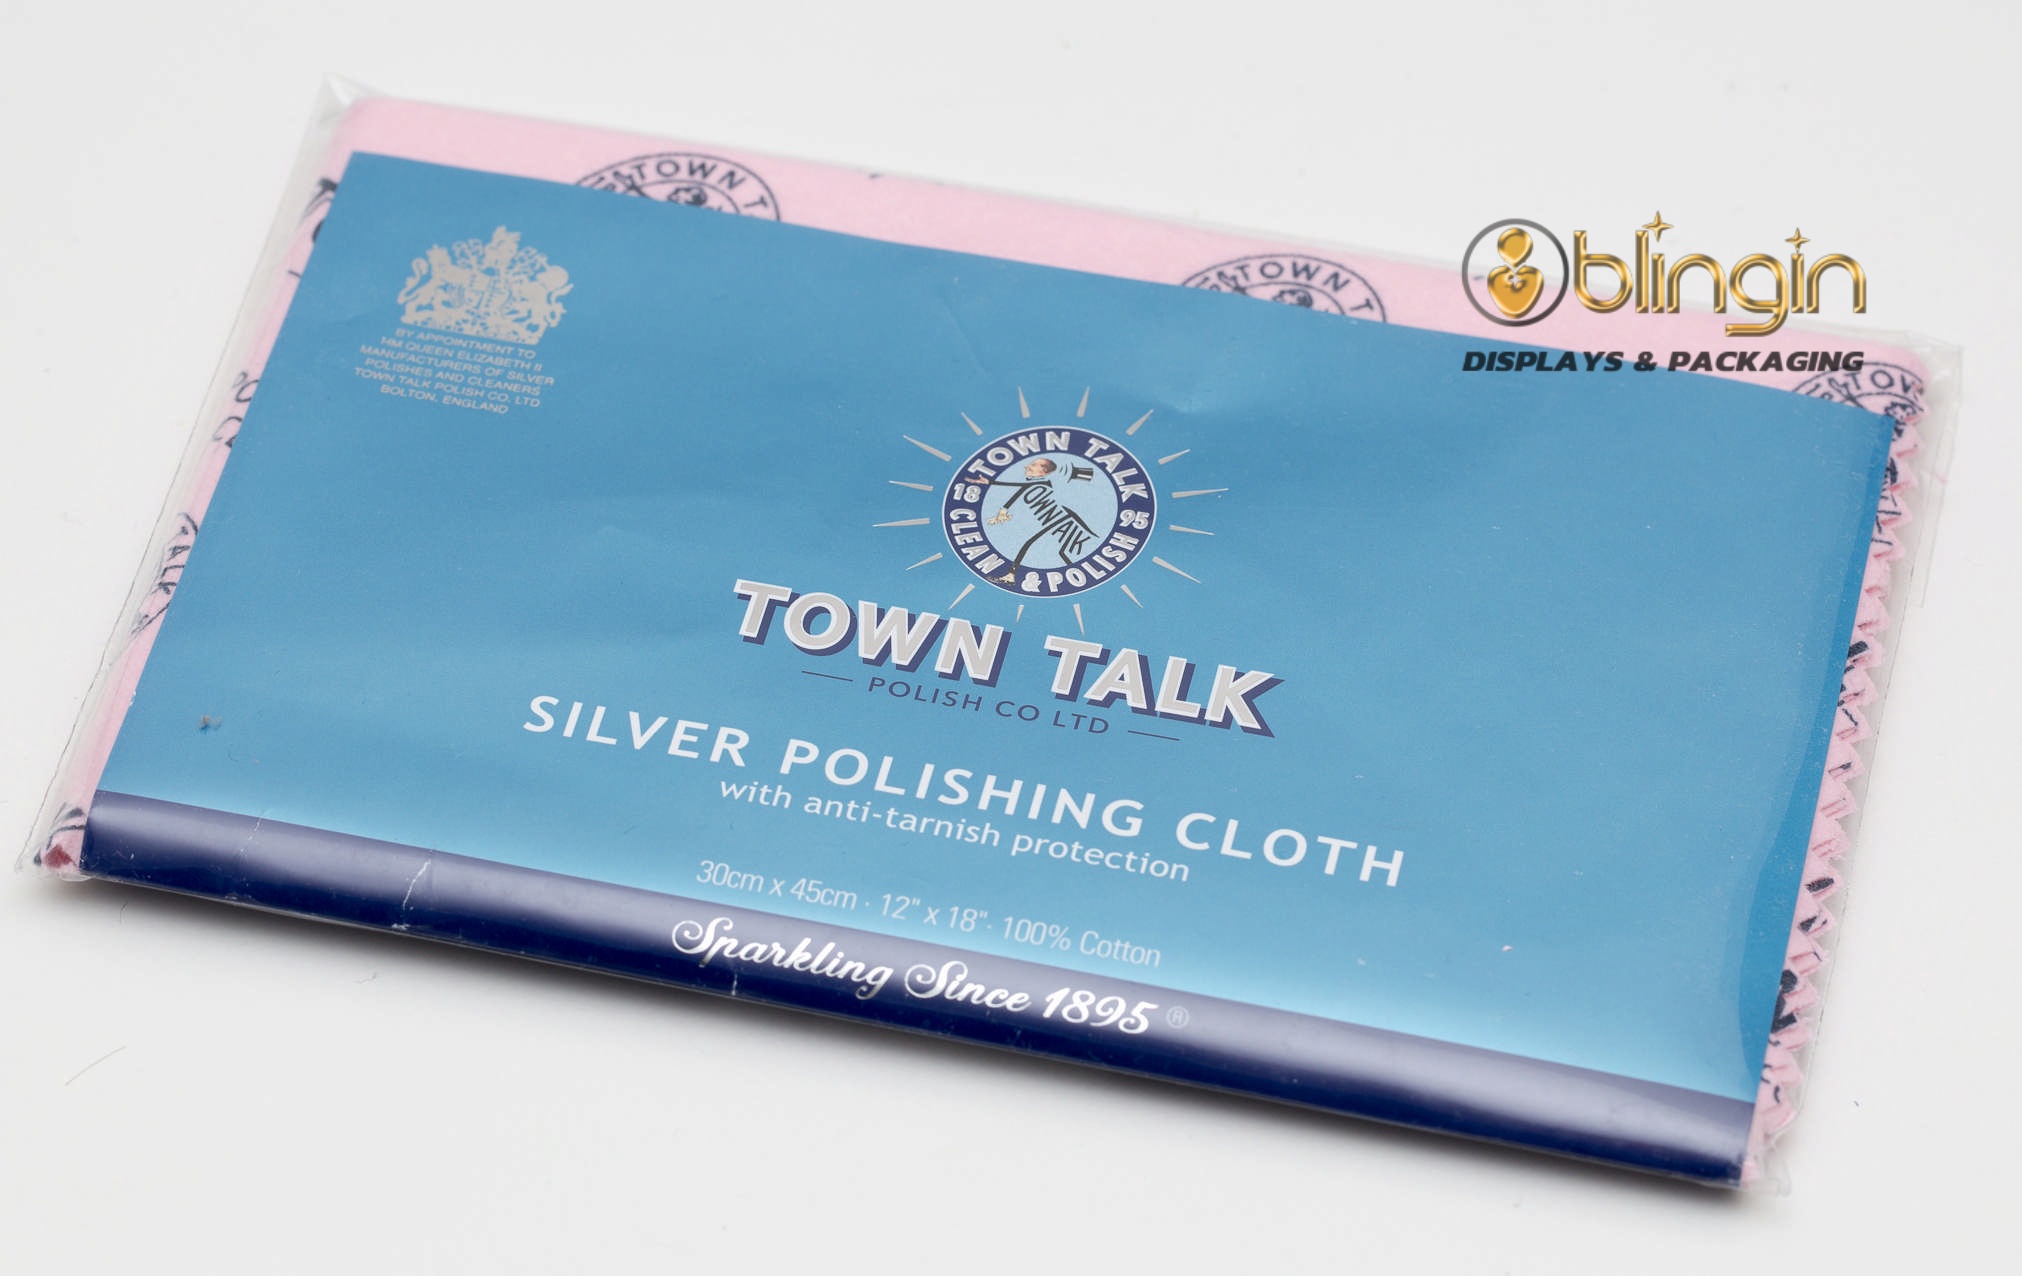 Town Talk Large Anti-Tarnish Silver Polishing Cloth